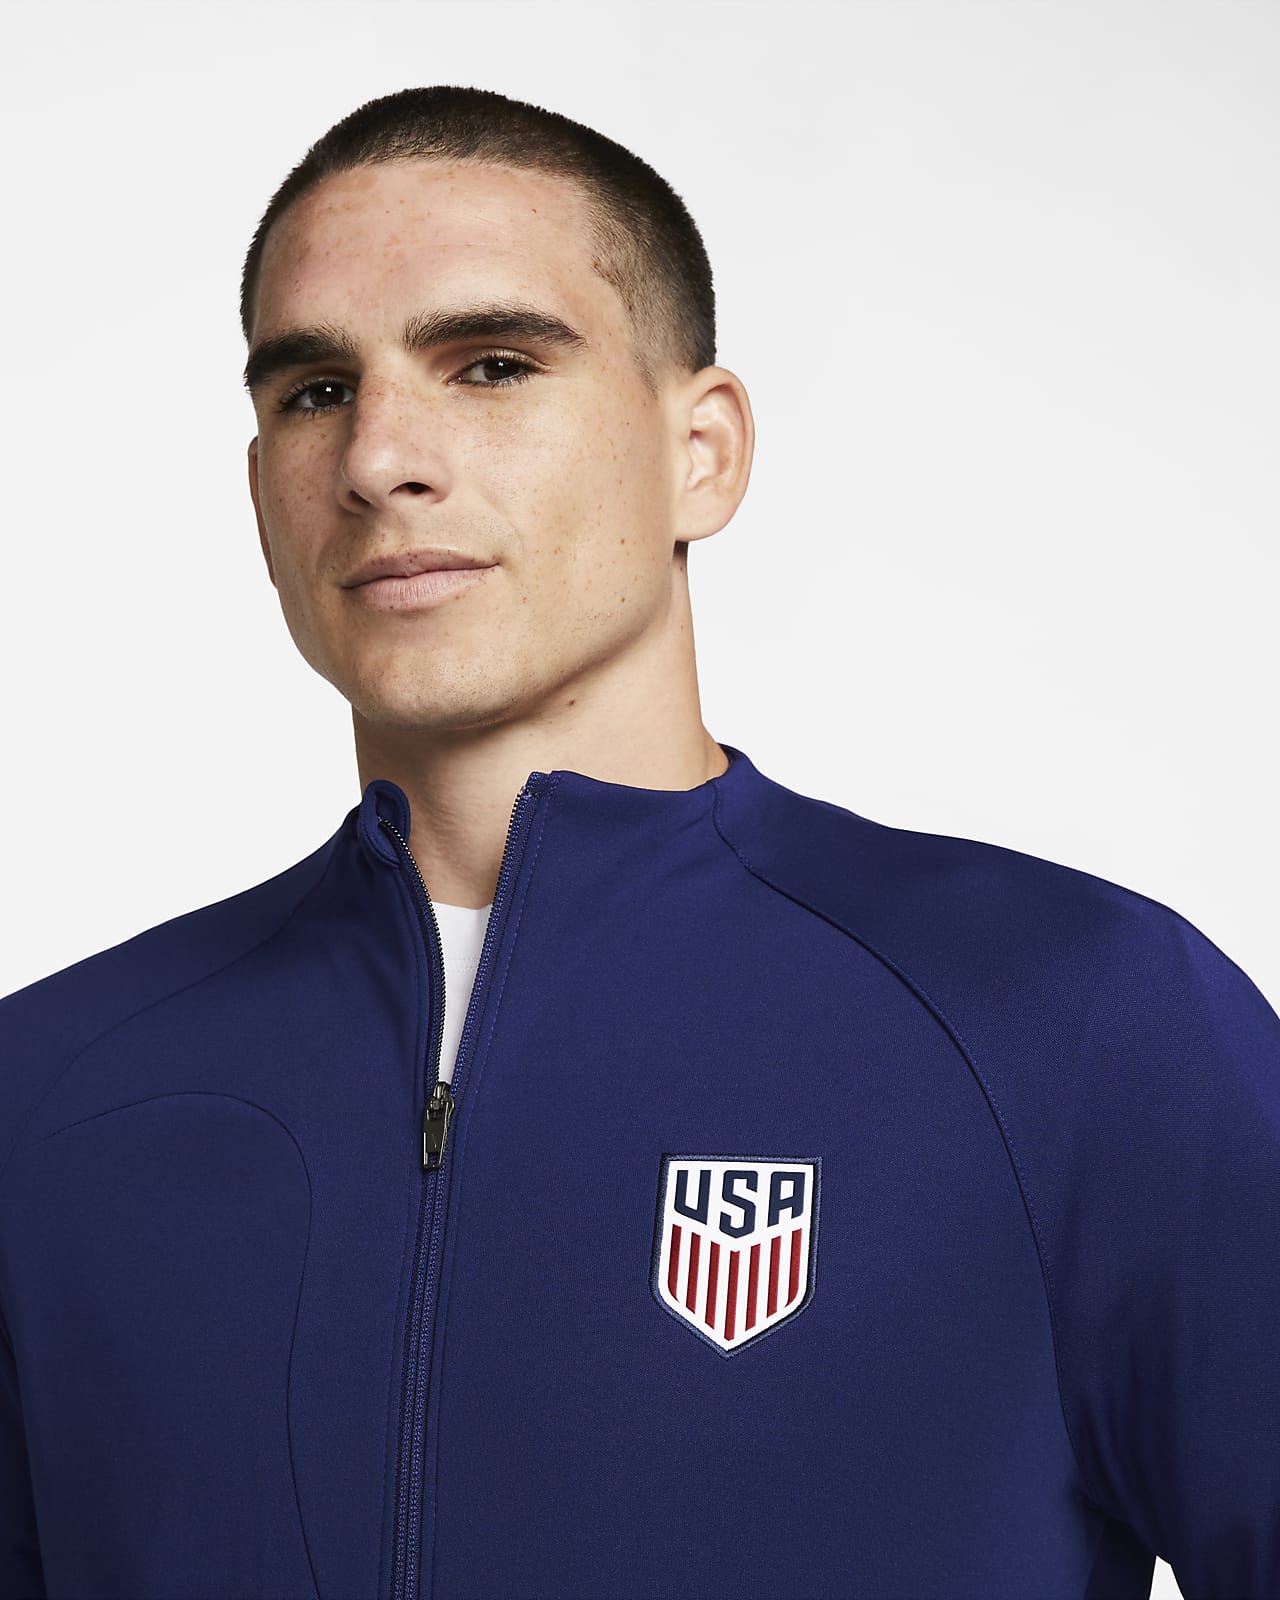 Omhoog plank Convergeren U.S. Academy Pro Men's Nike Dri-FIT Soccer Jacket. Nike.com